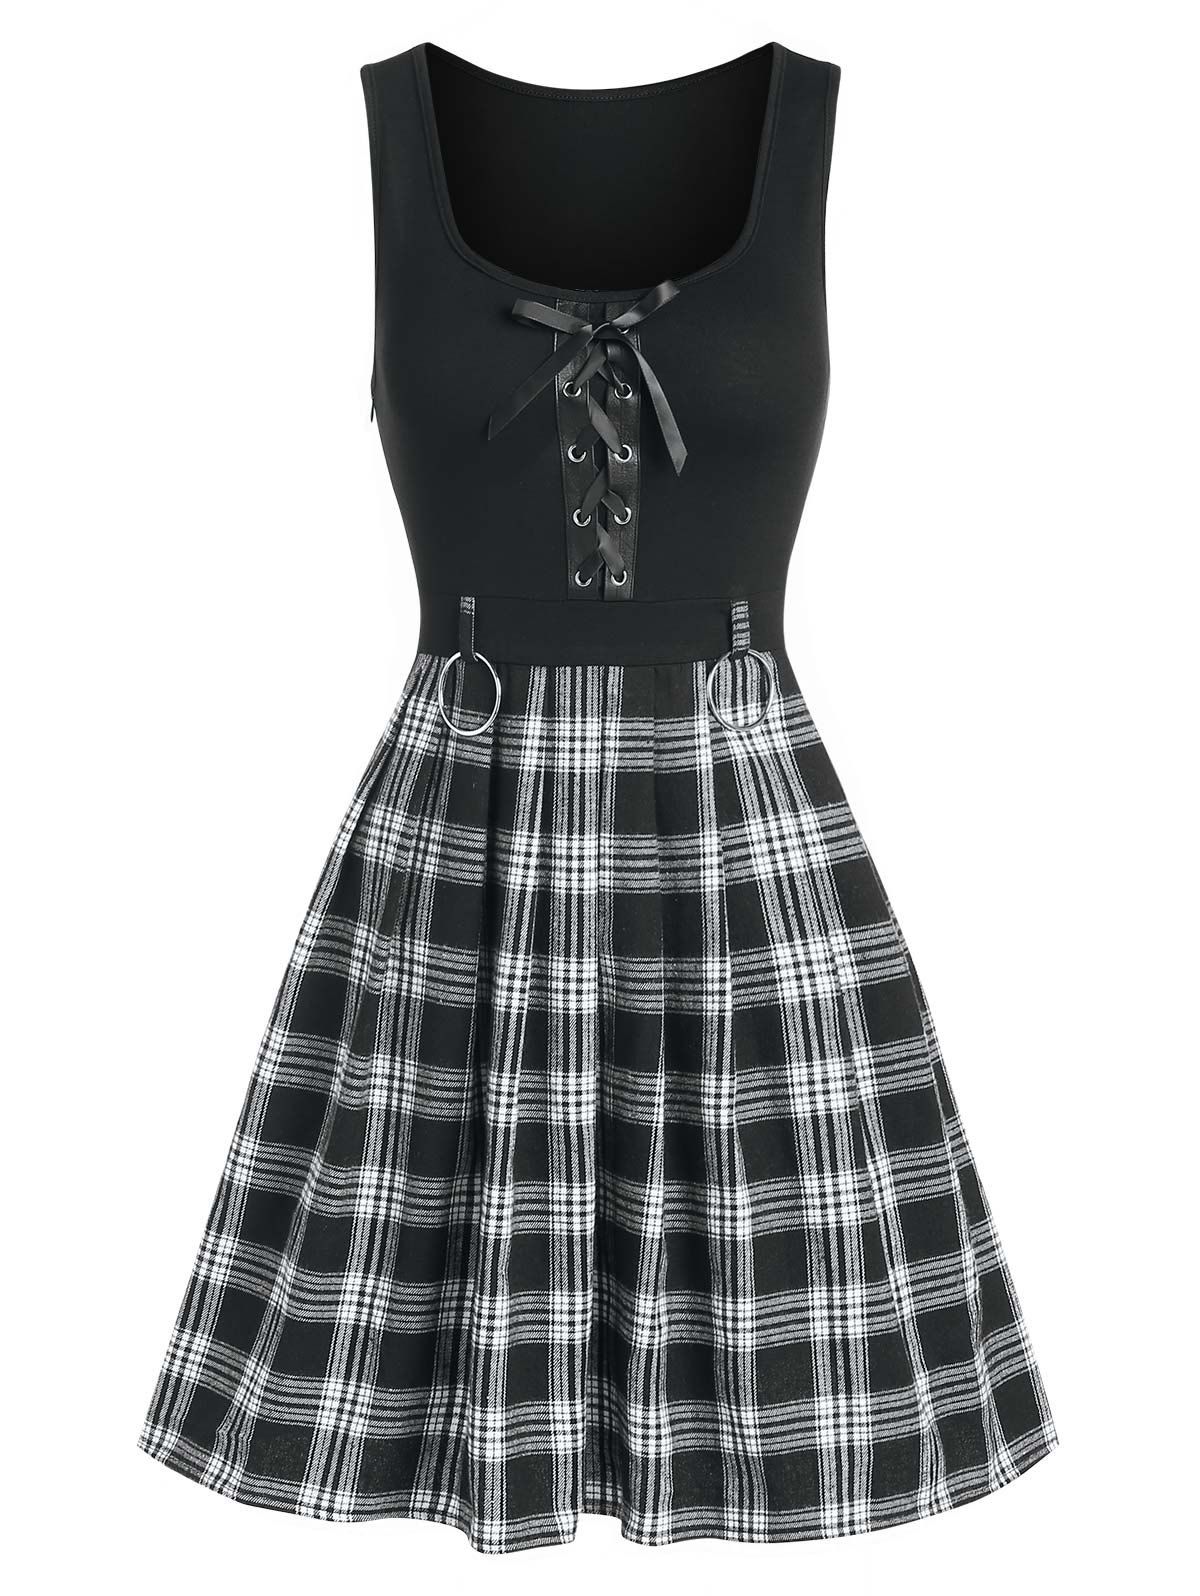 Plaid Print Mini Dress Lace Up Combo Dress Sleeveless A Line Dress - BLACK XXXL